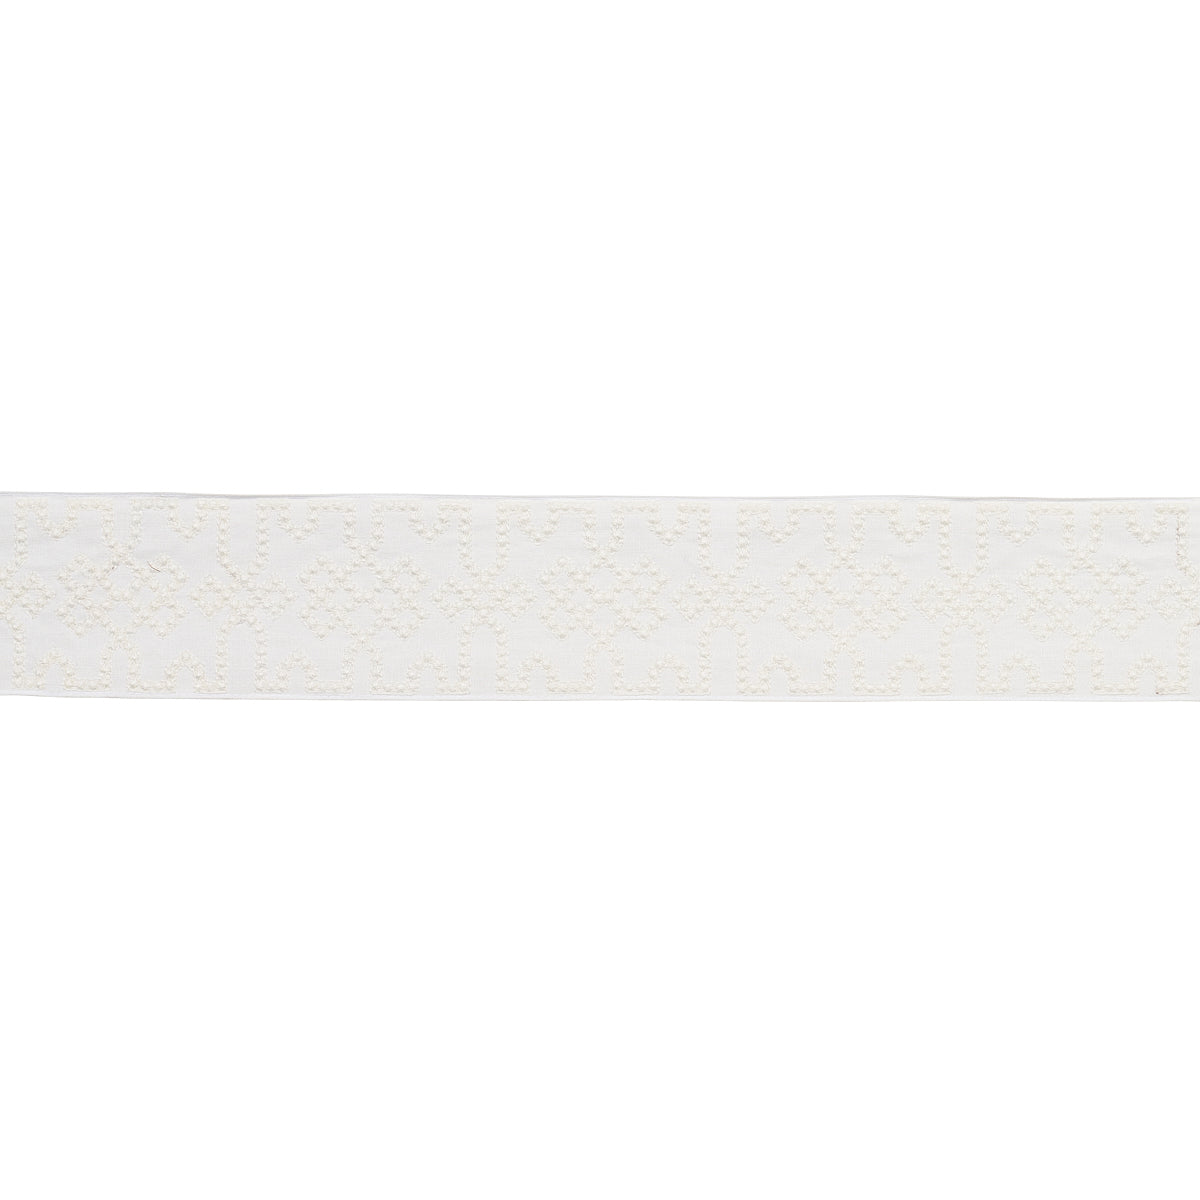 Knotted Trellis Tape | WHITE ON WHITE